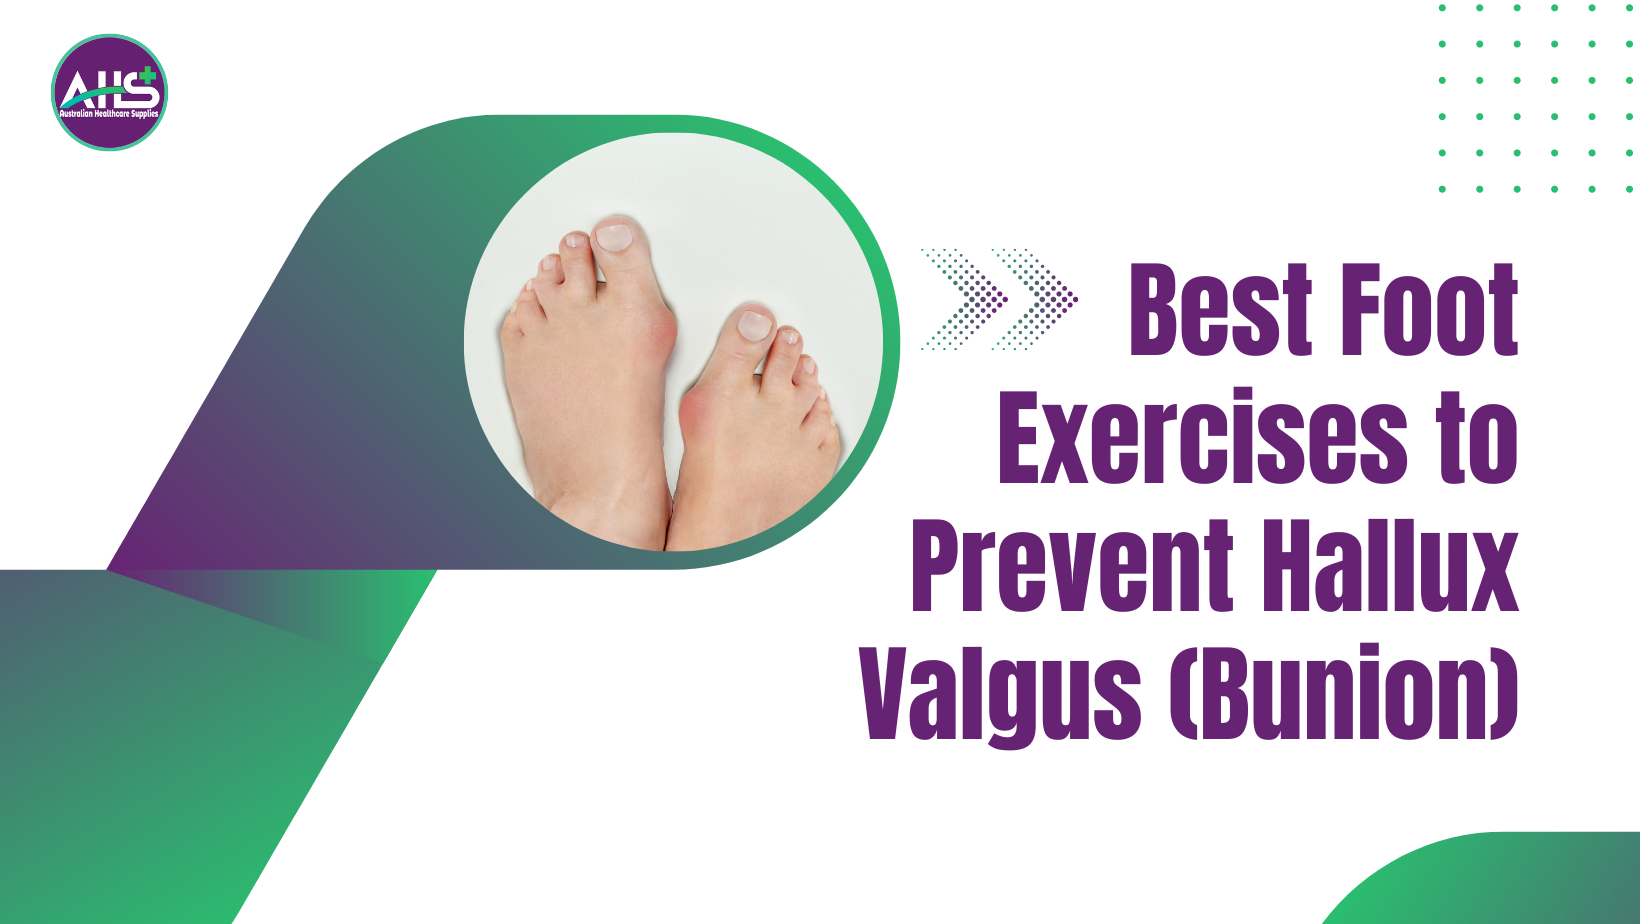 Best Foot Exercises to Prevent Hallux Valgus (Bunions)